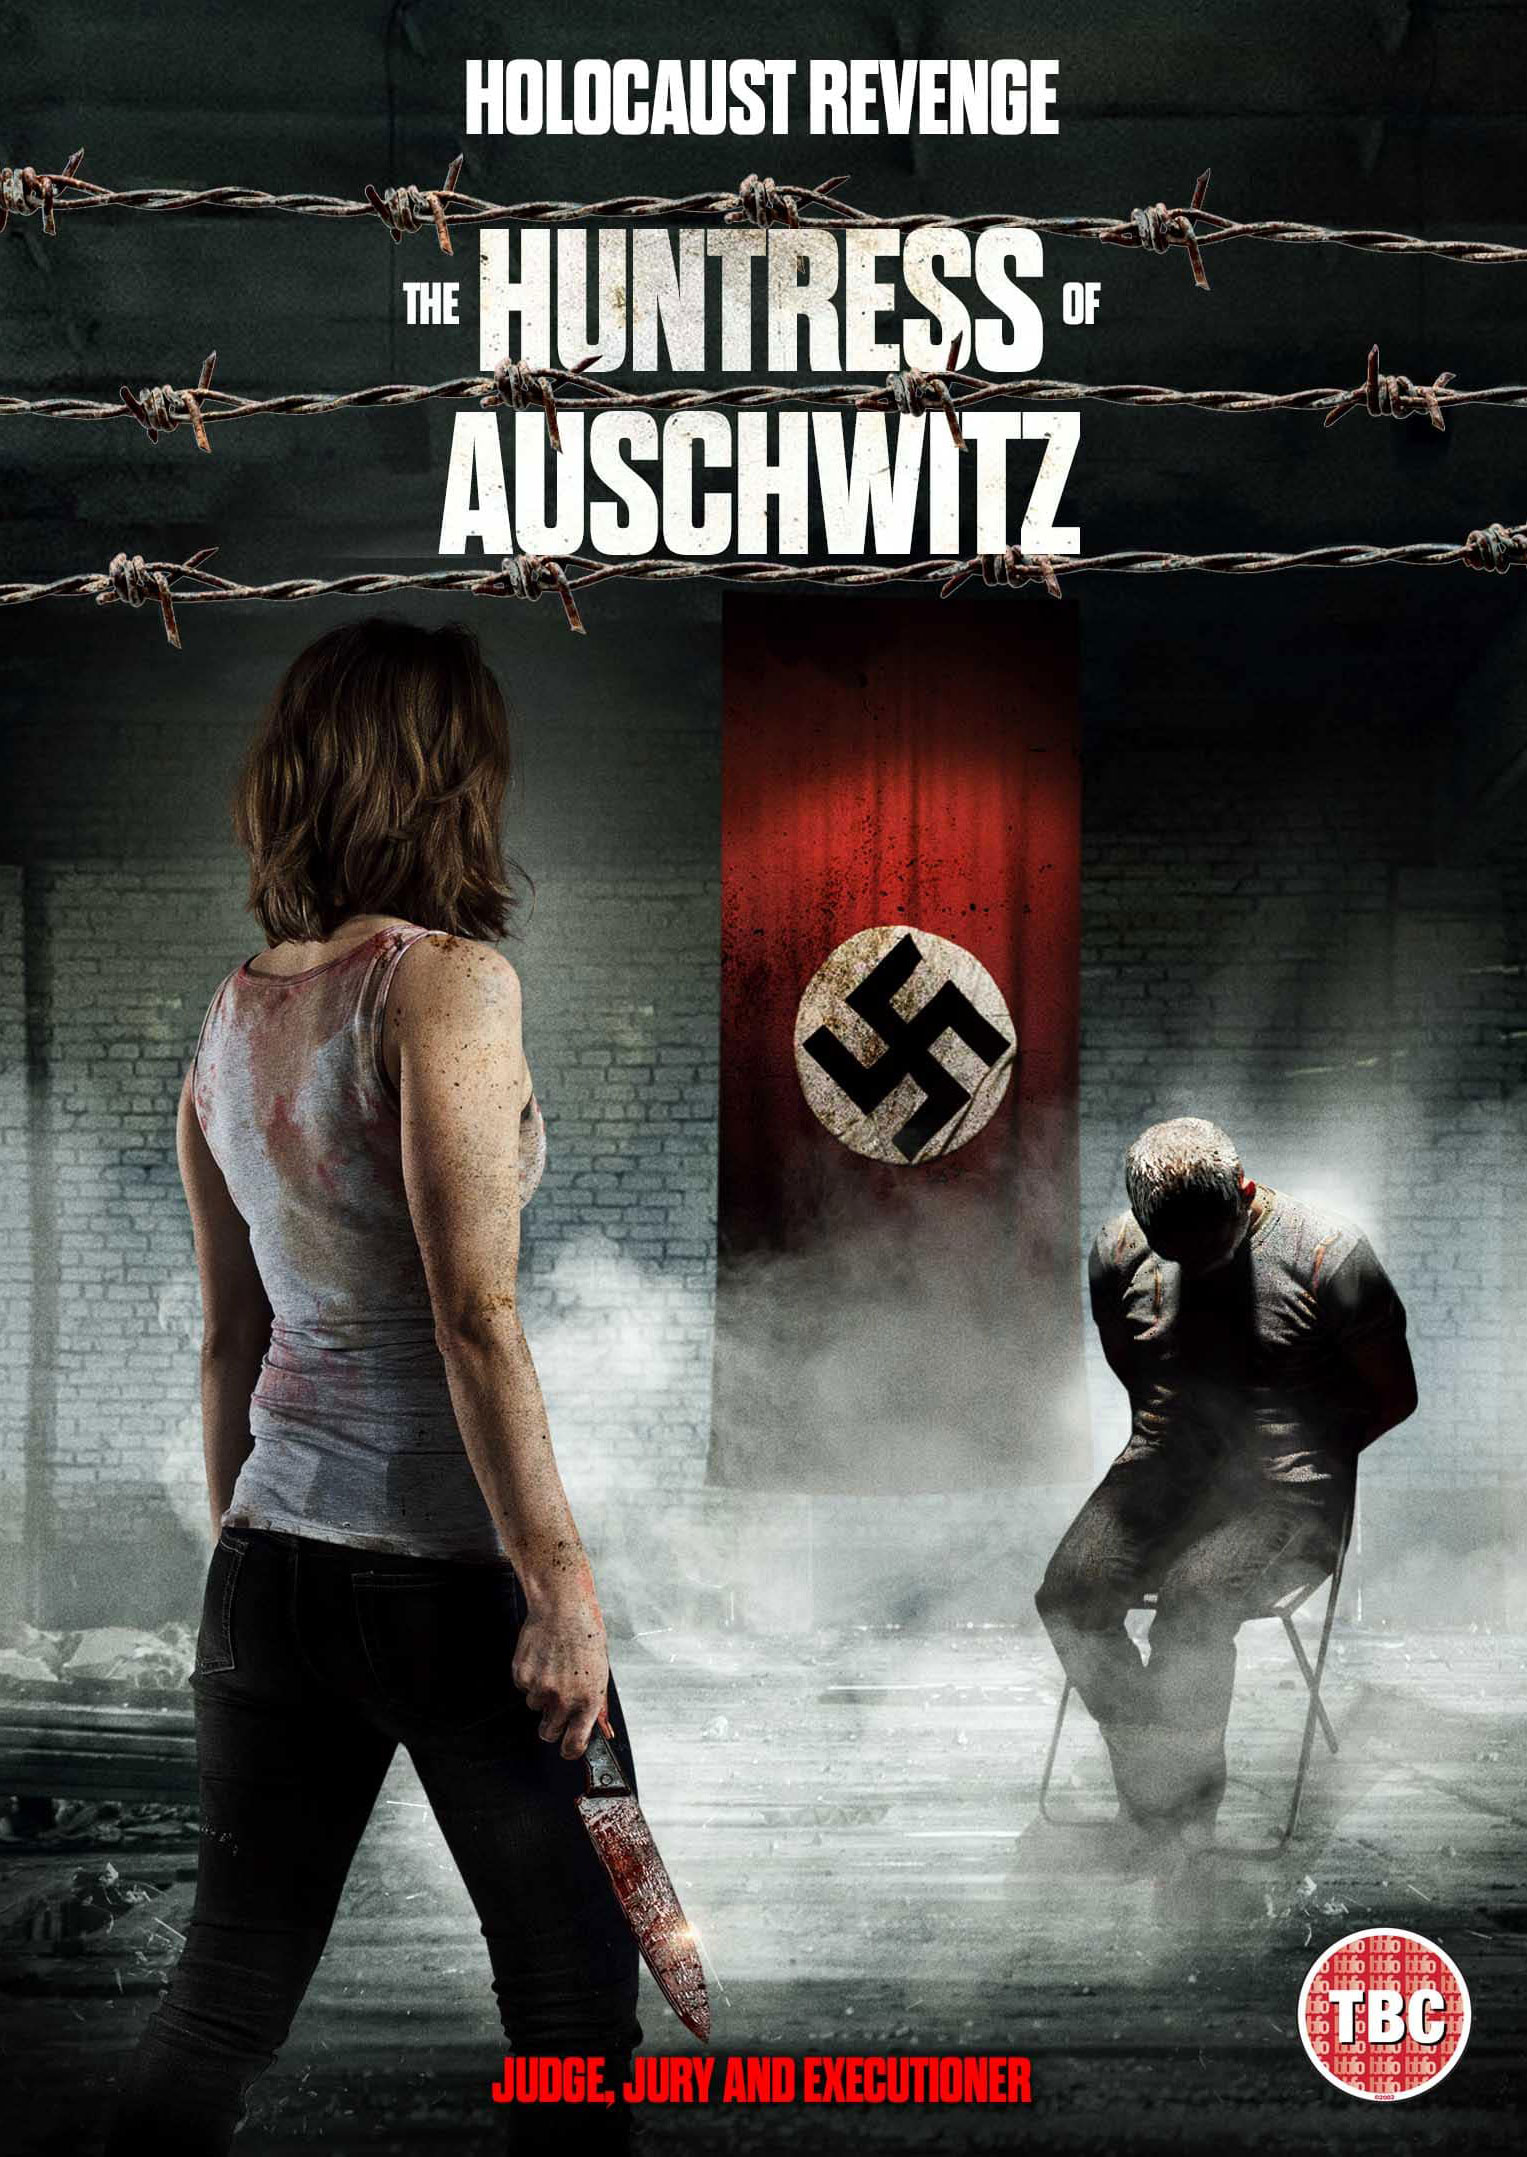 The Huntress of Auschwitz 2022 English 250MB HDRip 480p Download